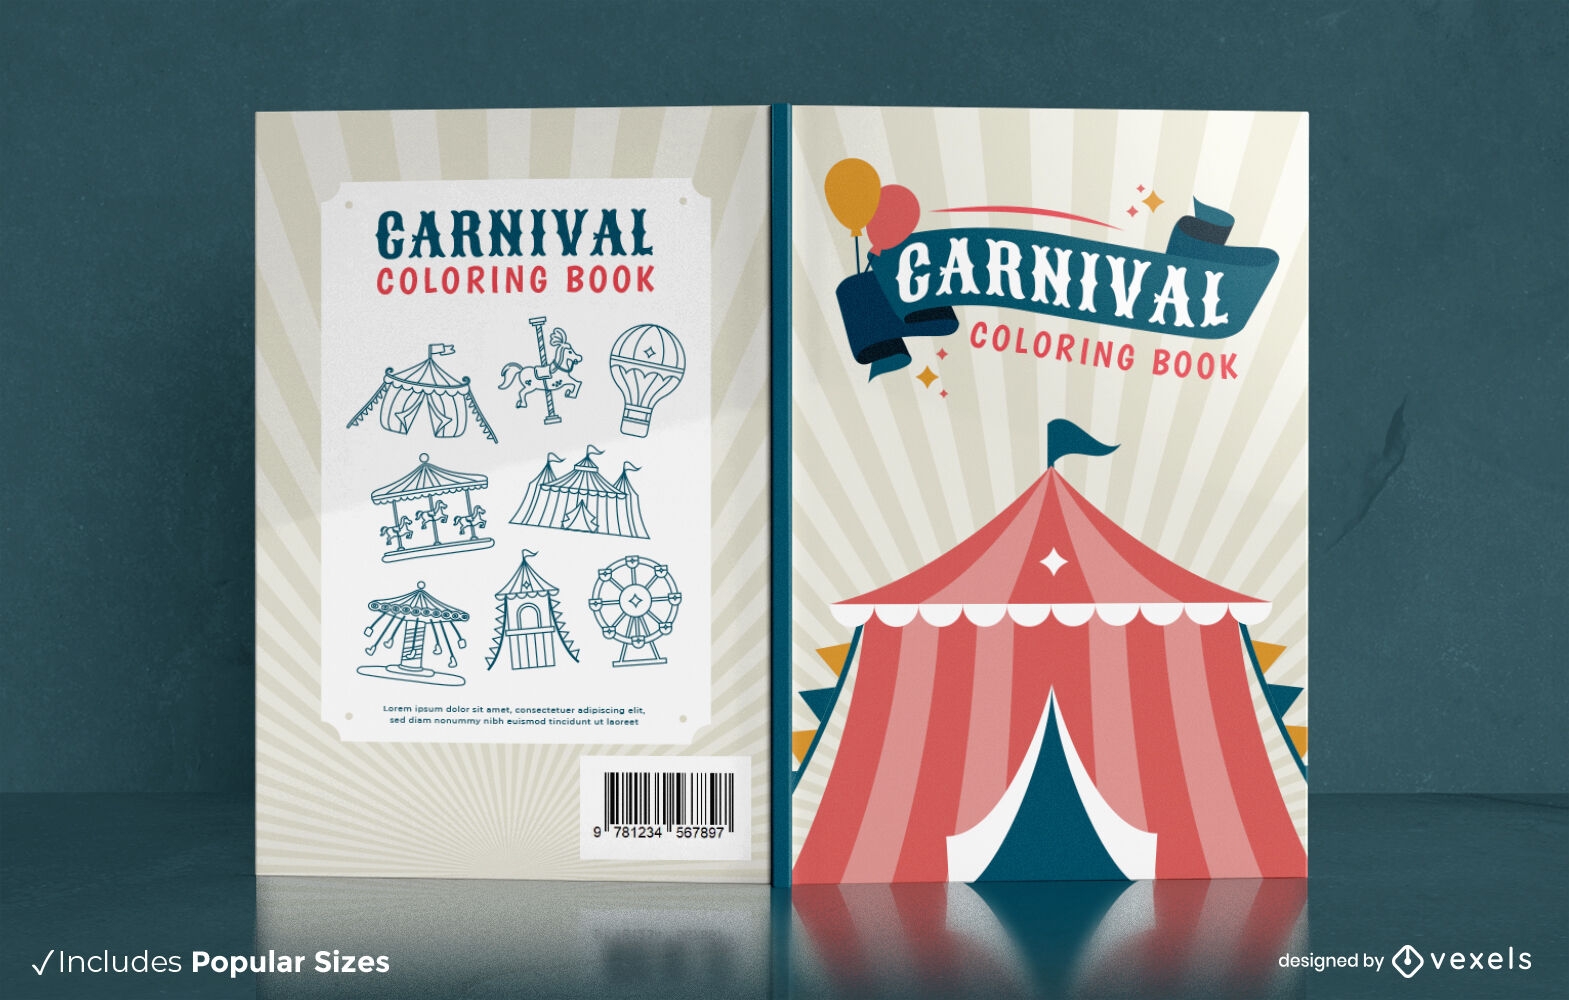 Carnival coloring book cover design